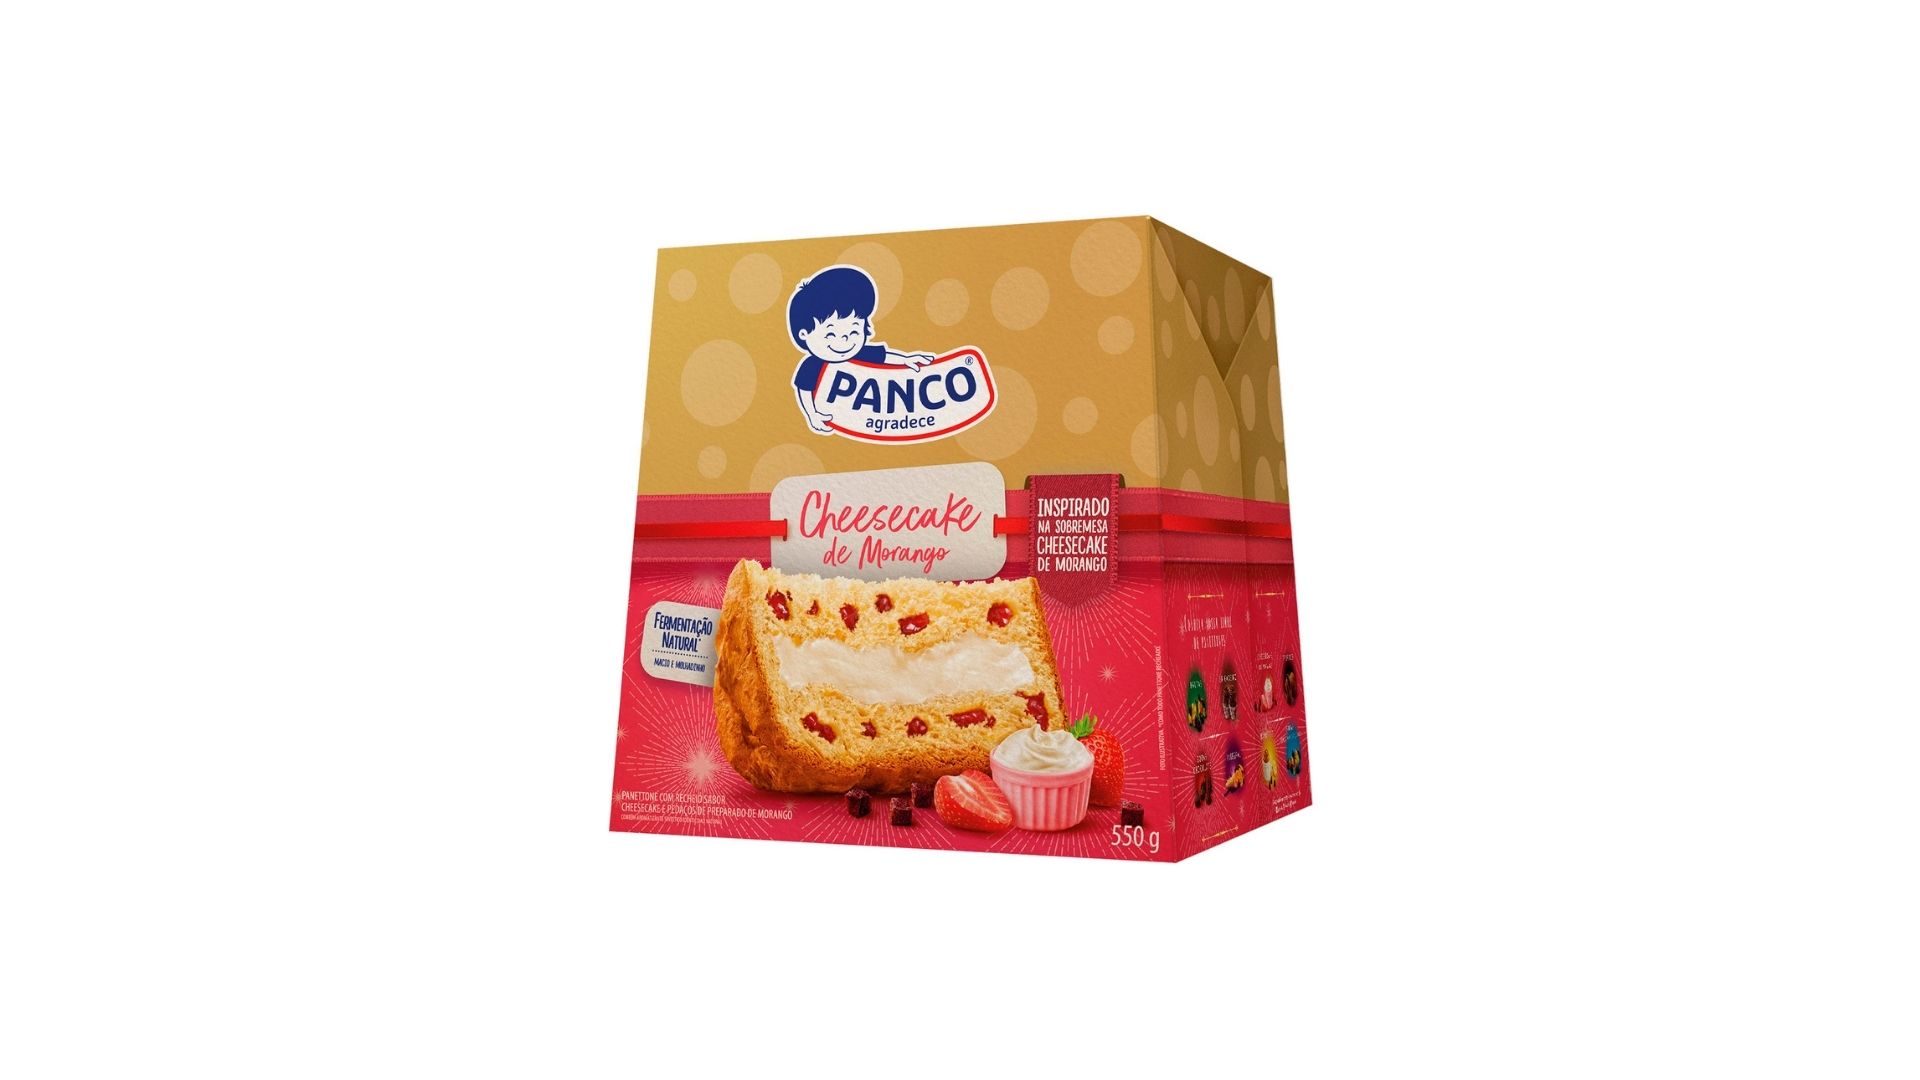 Featured image for “Panco apresenta panetone sabor cheesecake de morango”